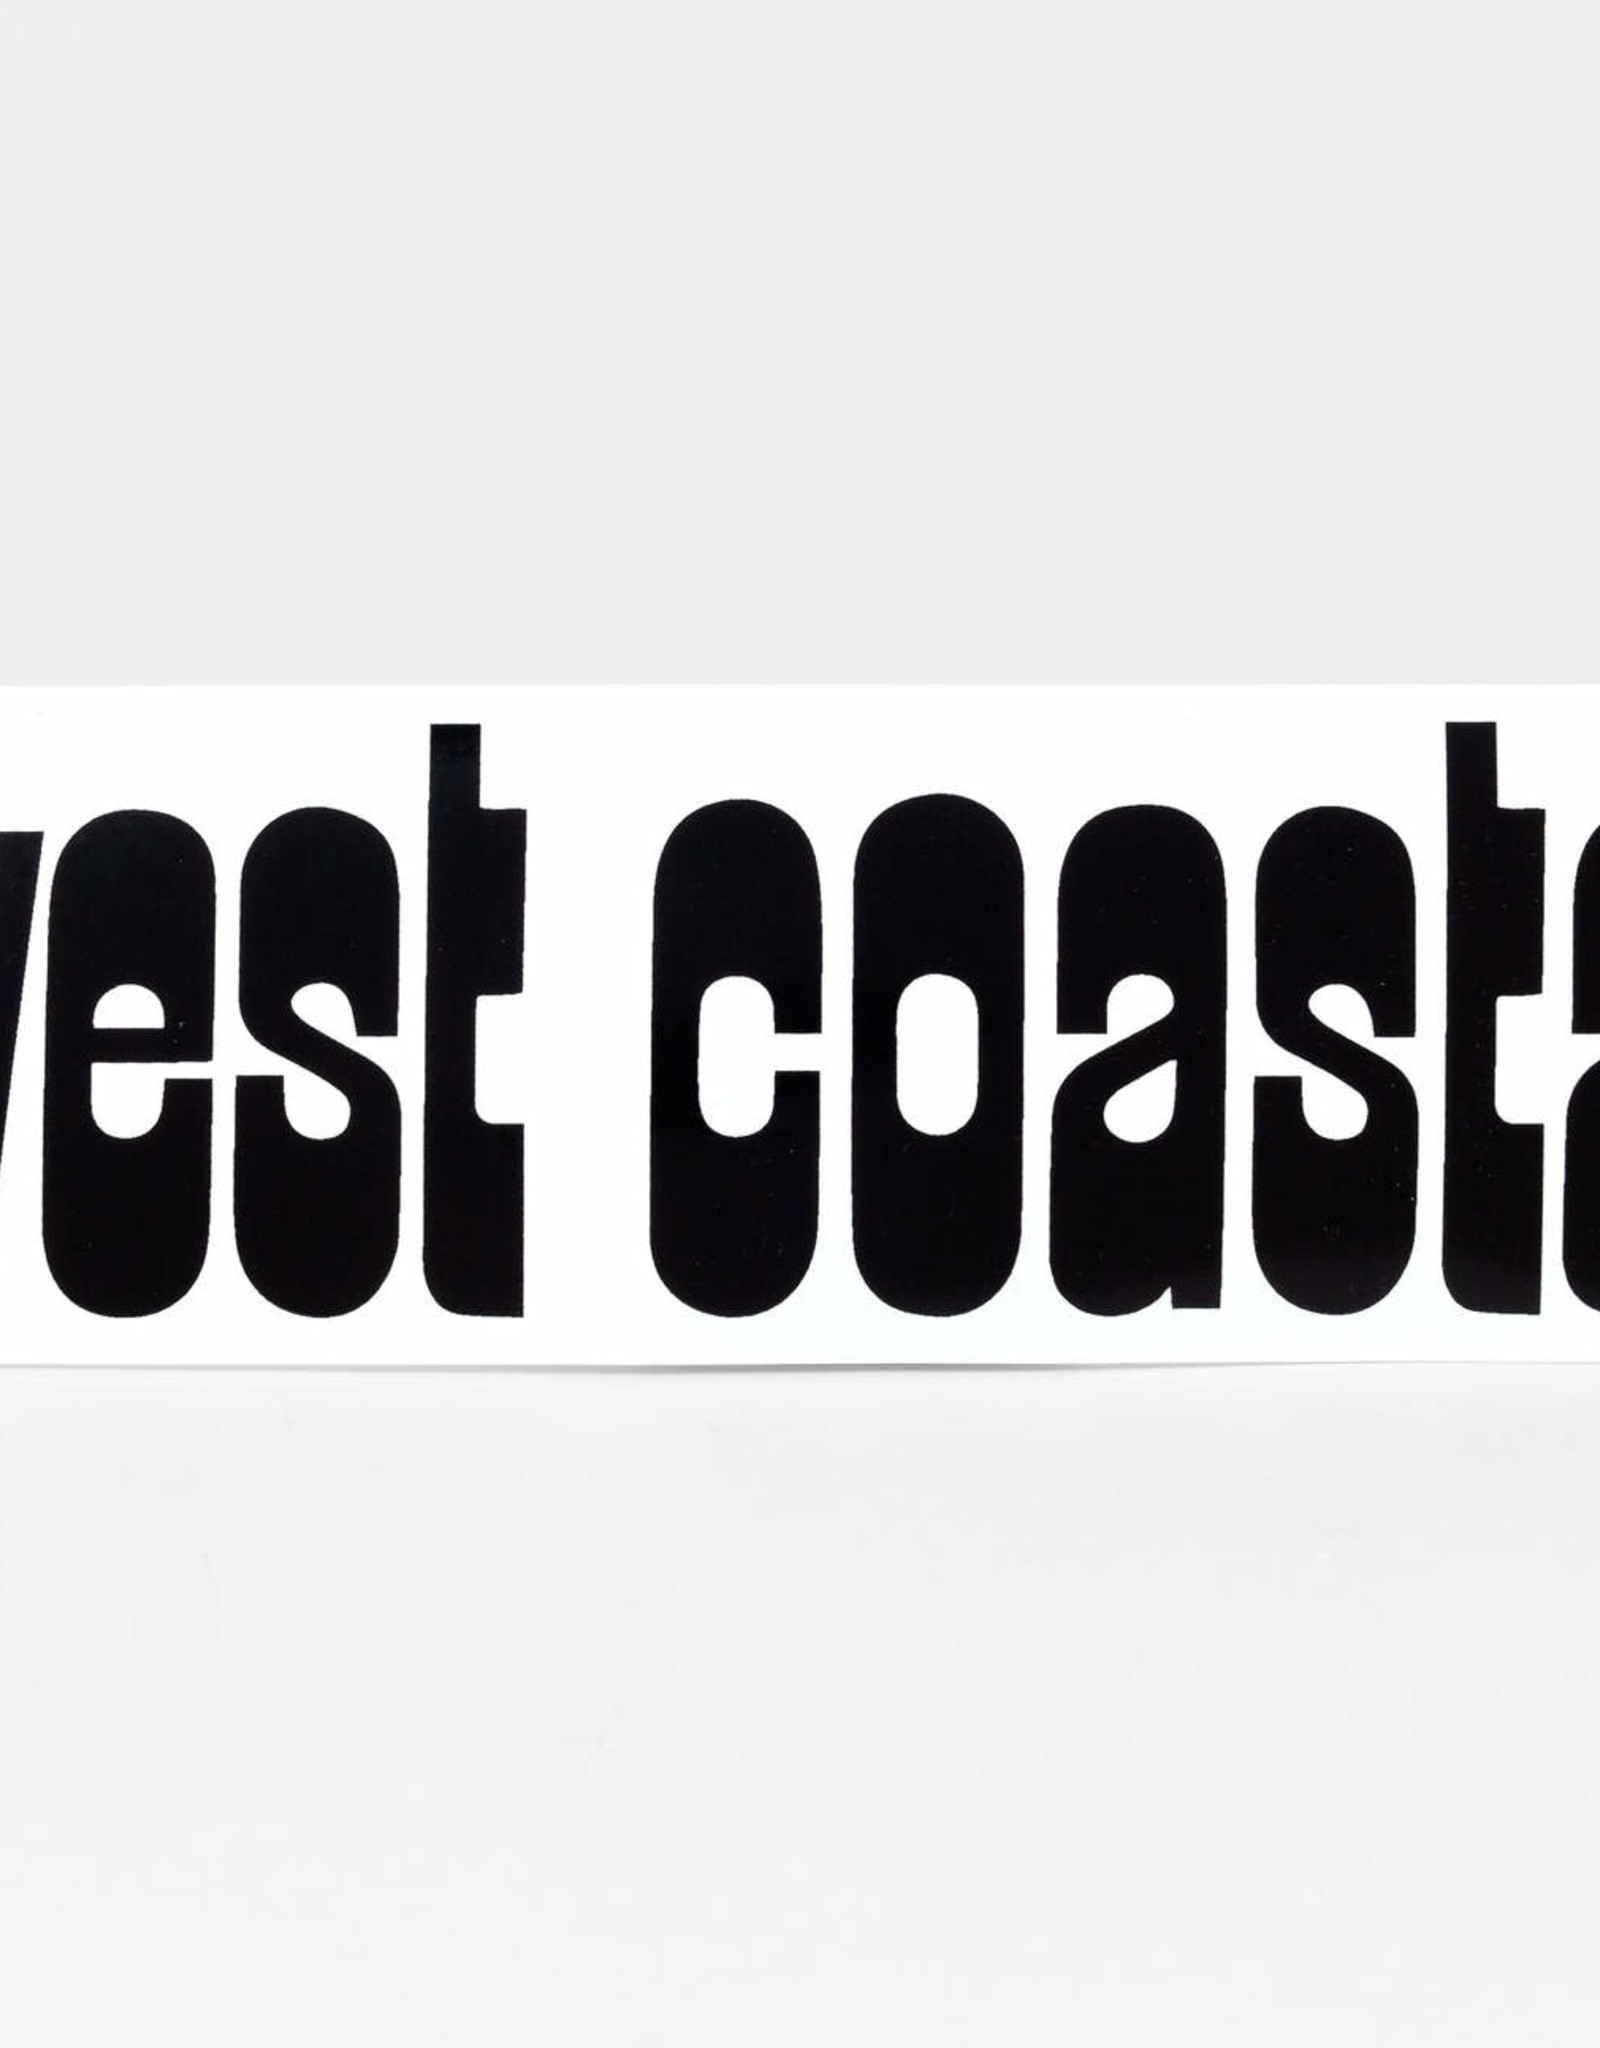 West Coastal Sticker - Nicole Lavelle